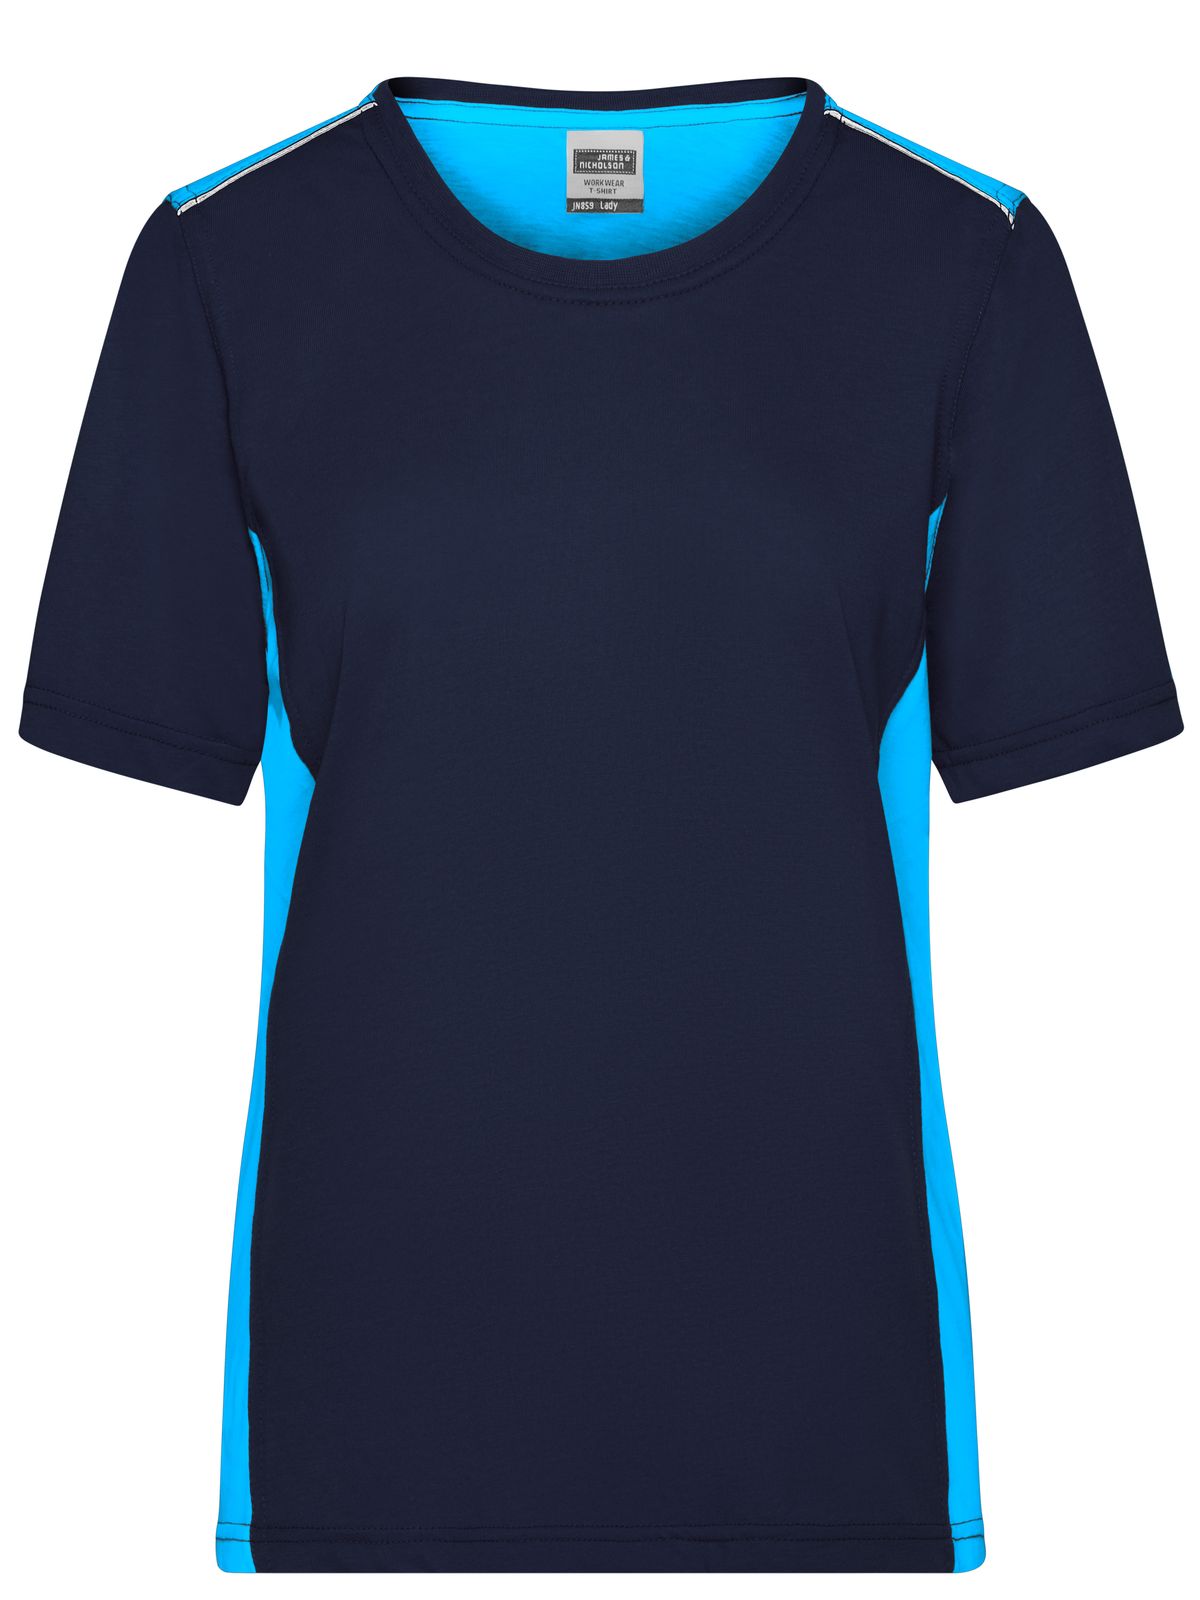 ladies-workwear-t-shirt-color-navy-tourquoise.webp